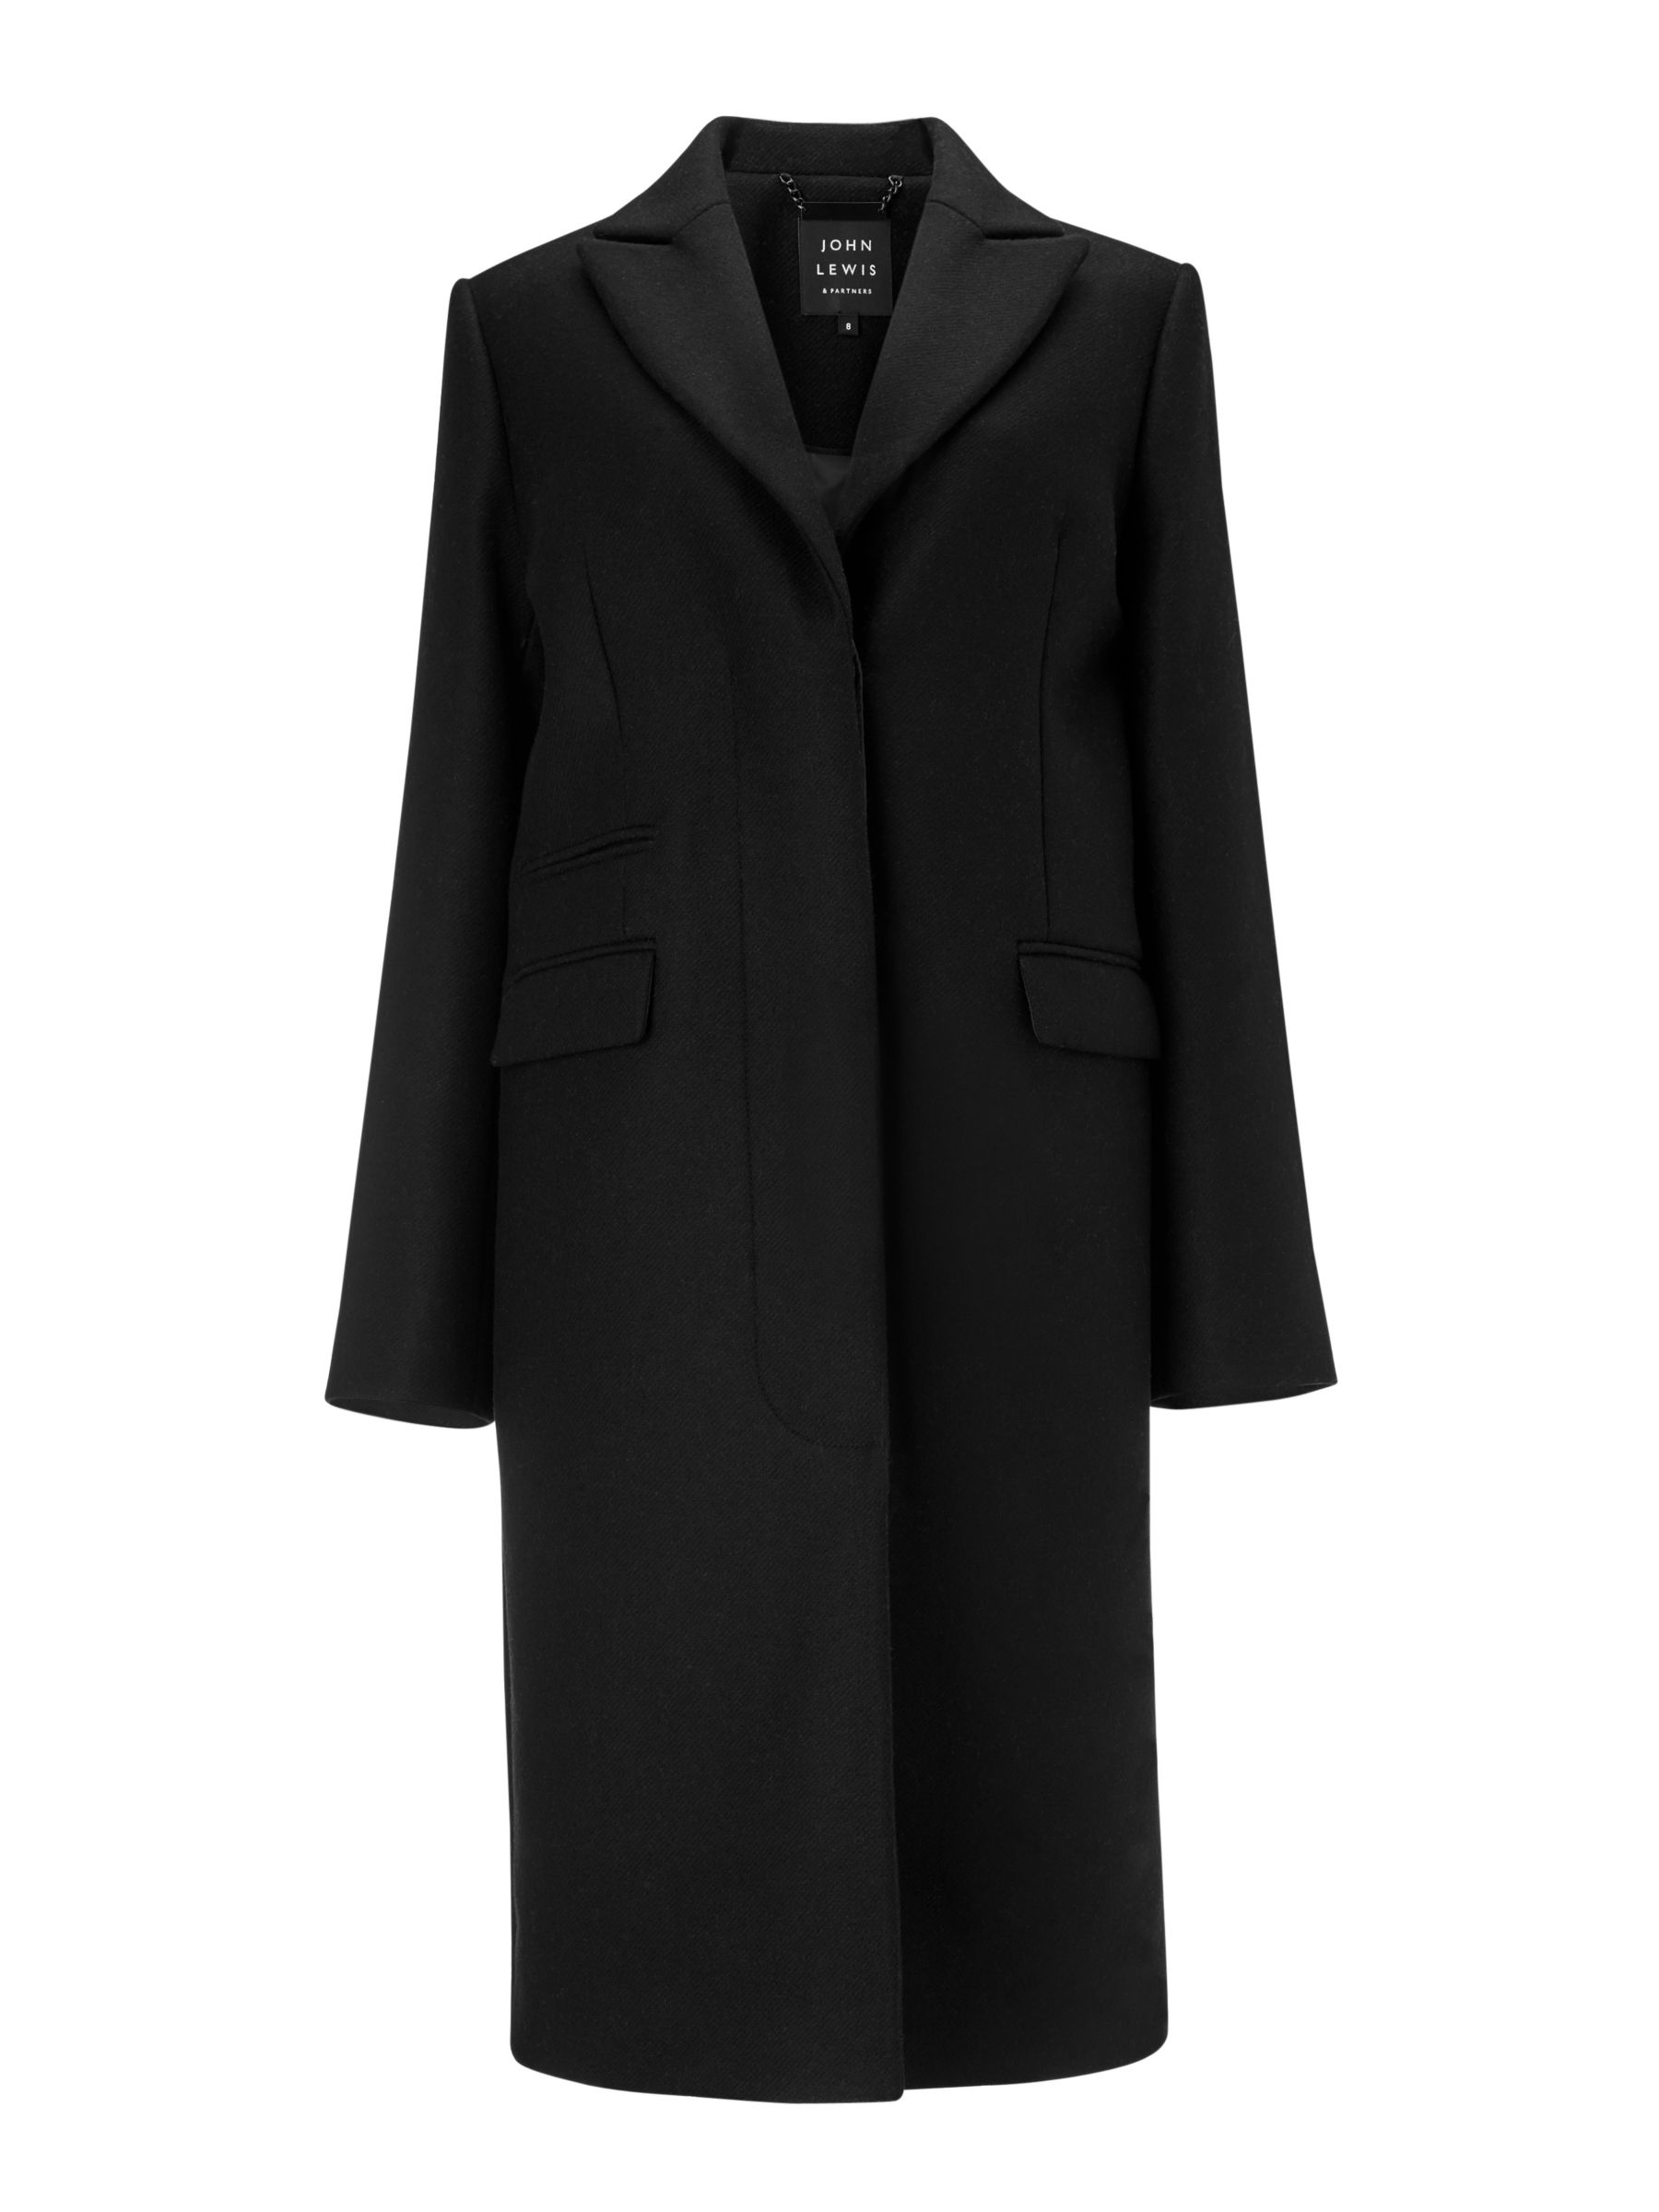 John Lewis & Partners Crombie Coat, Black at John Lewis & Partners